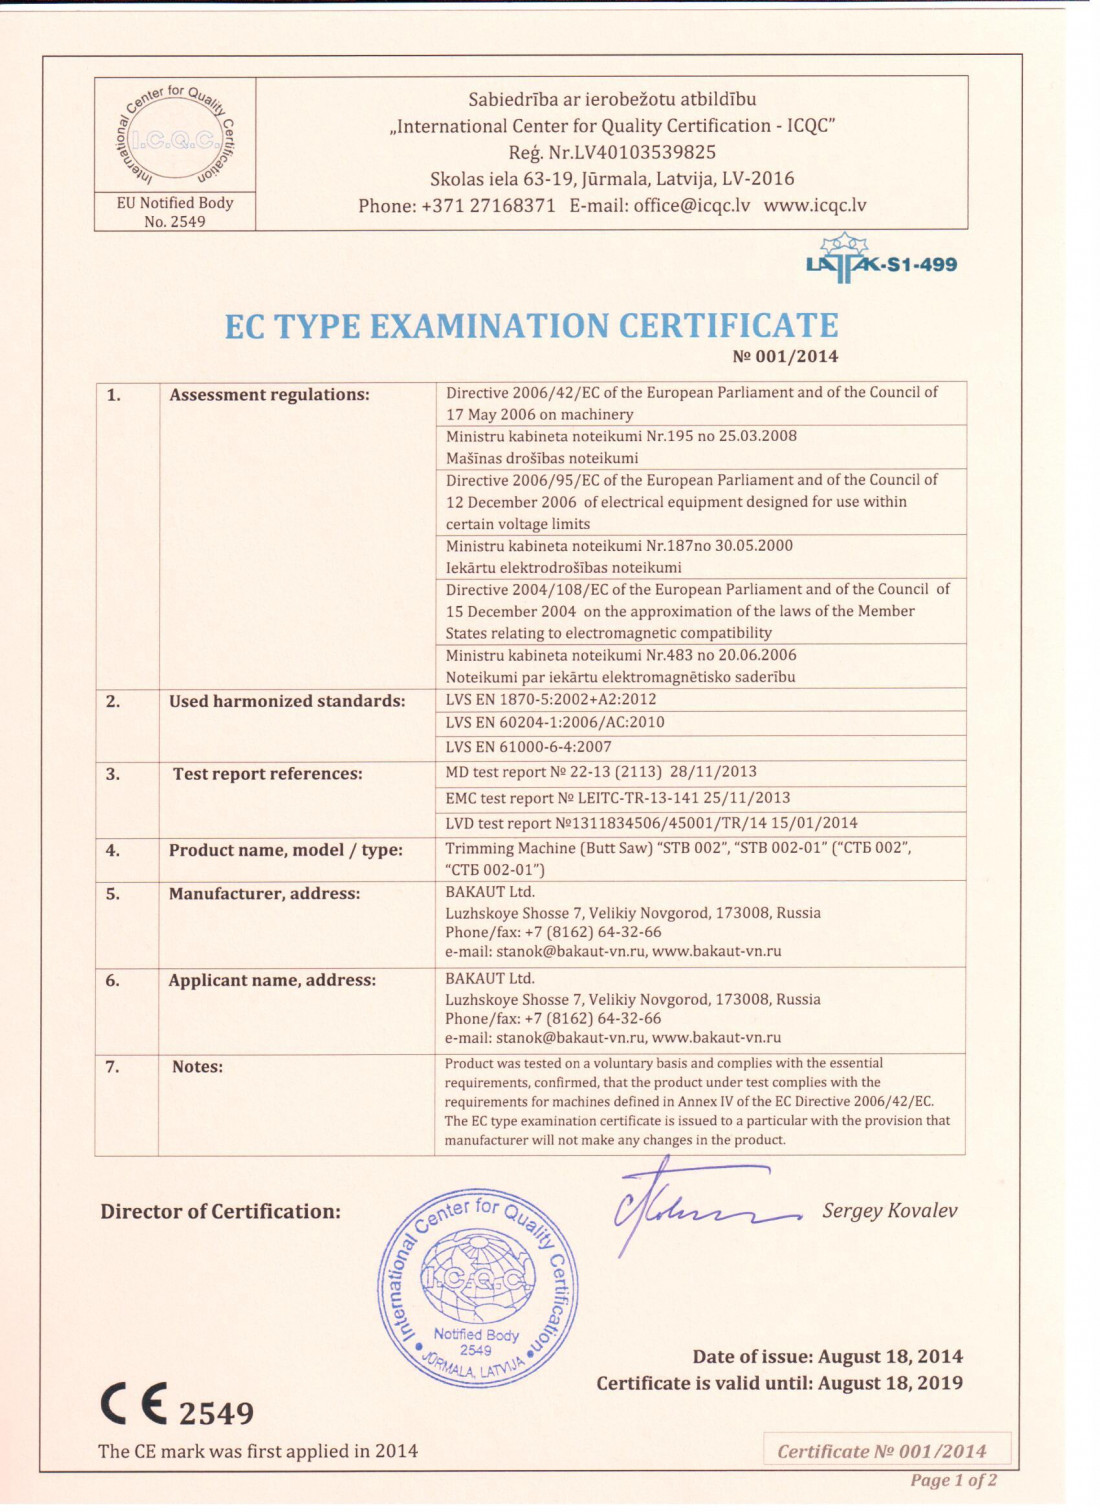 EU-type examination certificate